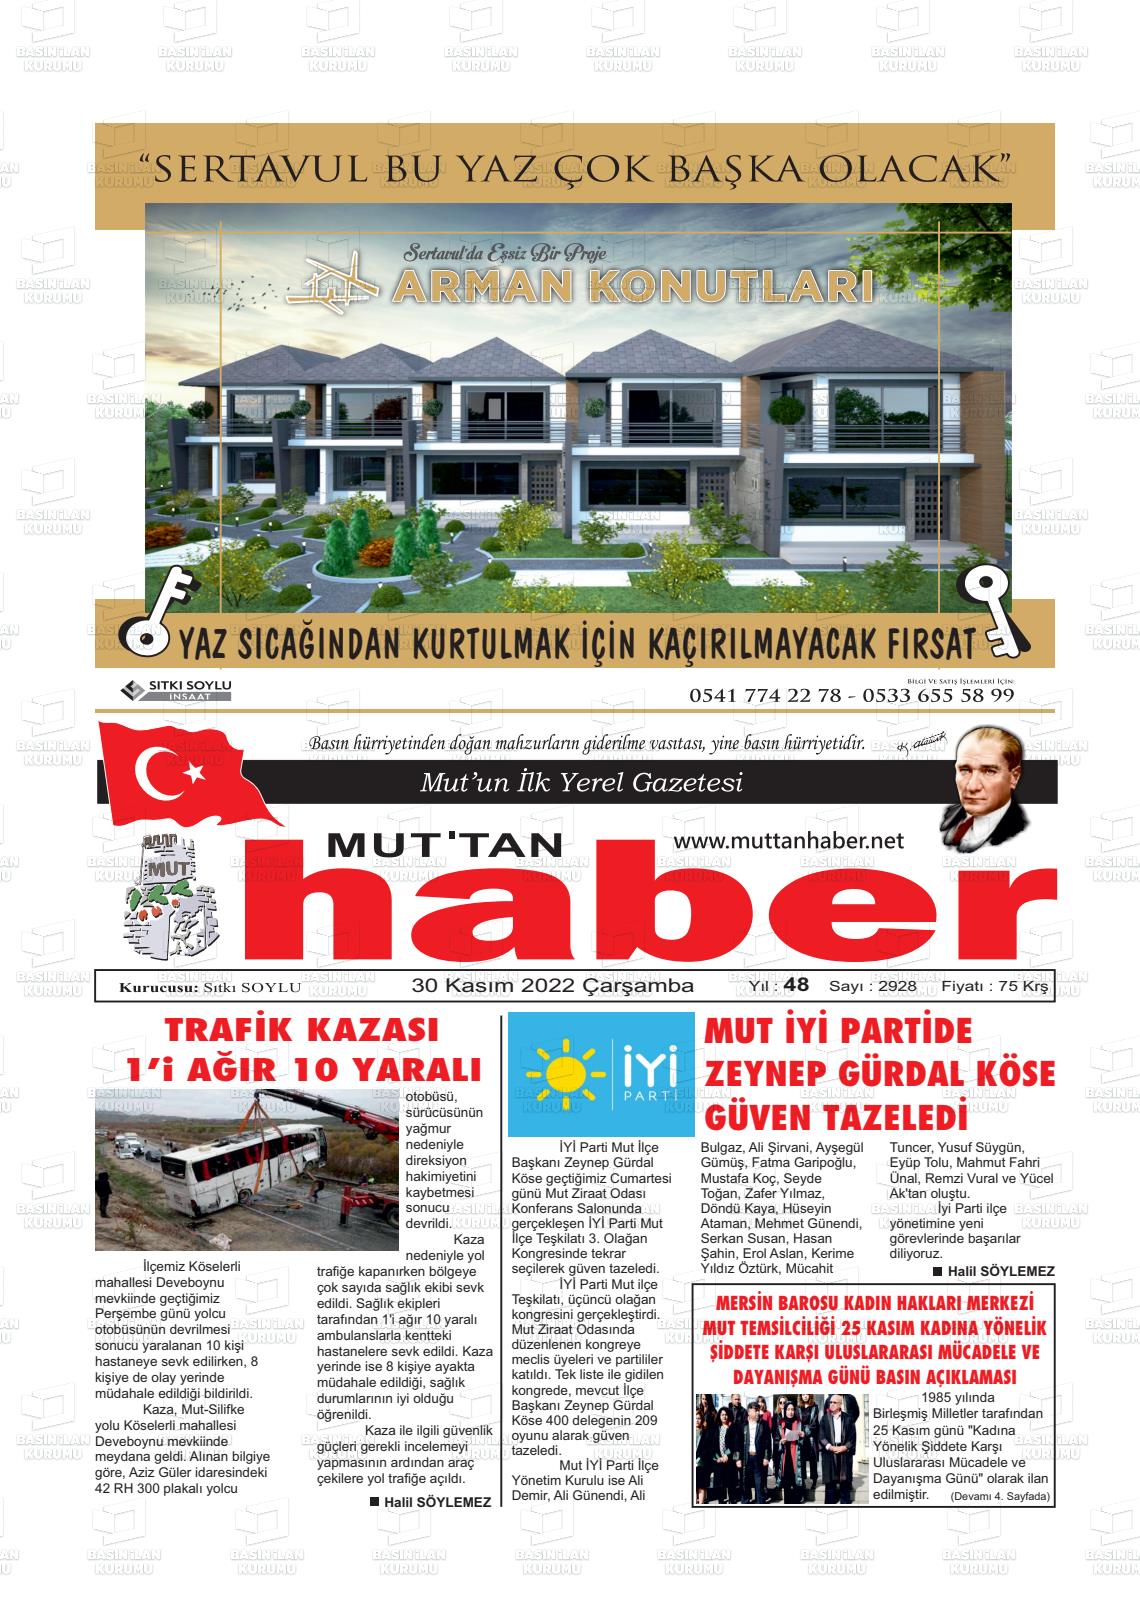 30 Kasım 2022 Mut'tan Haber Gazete Manşeti